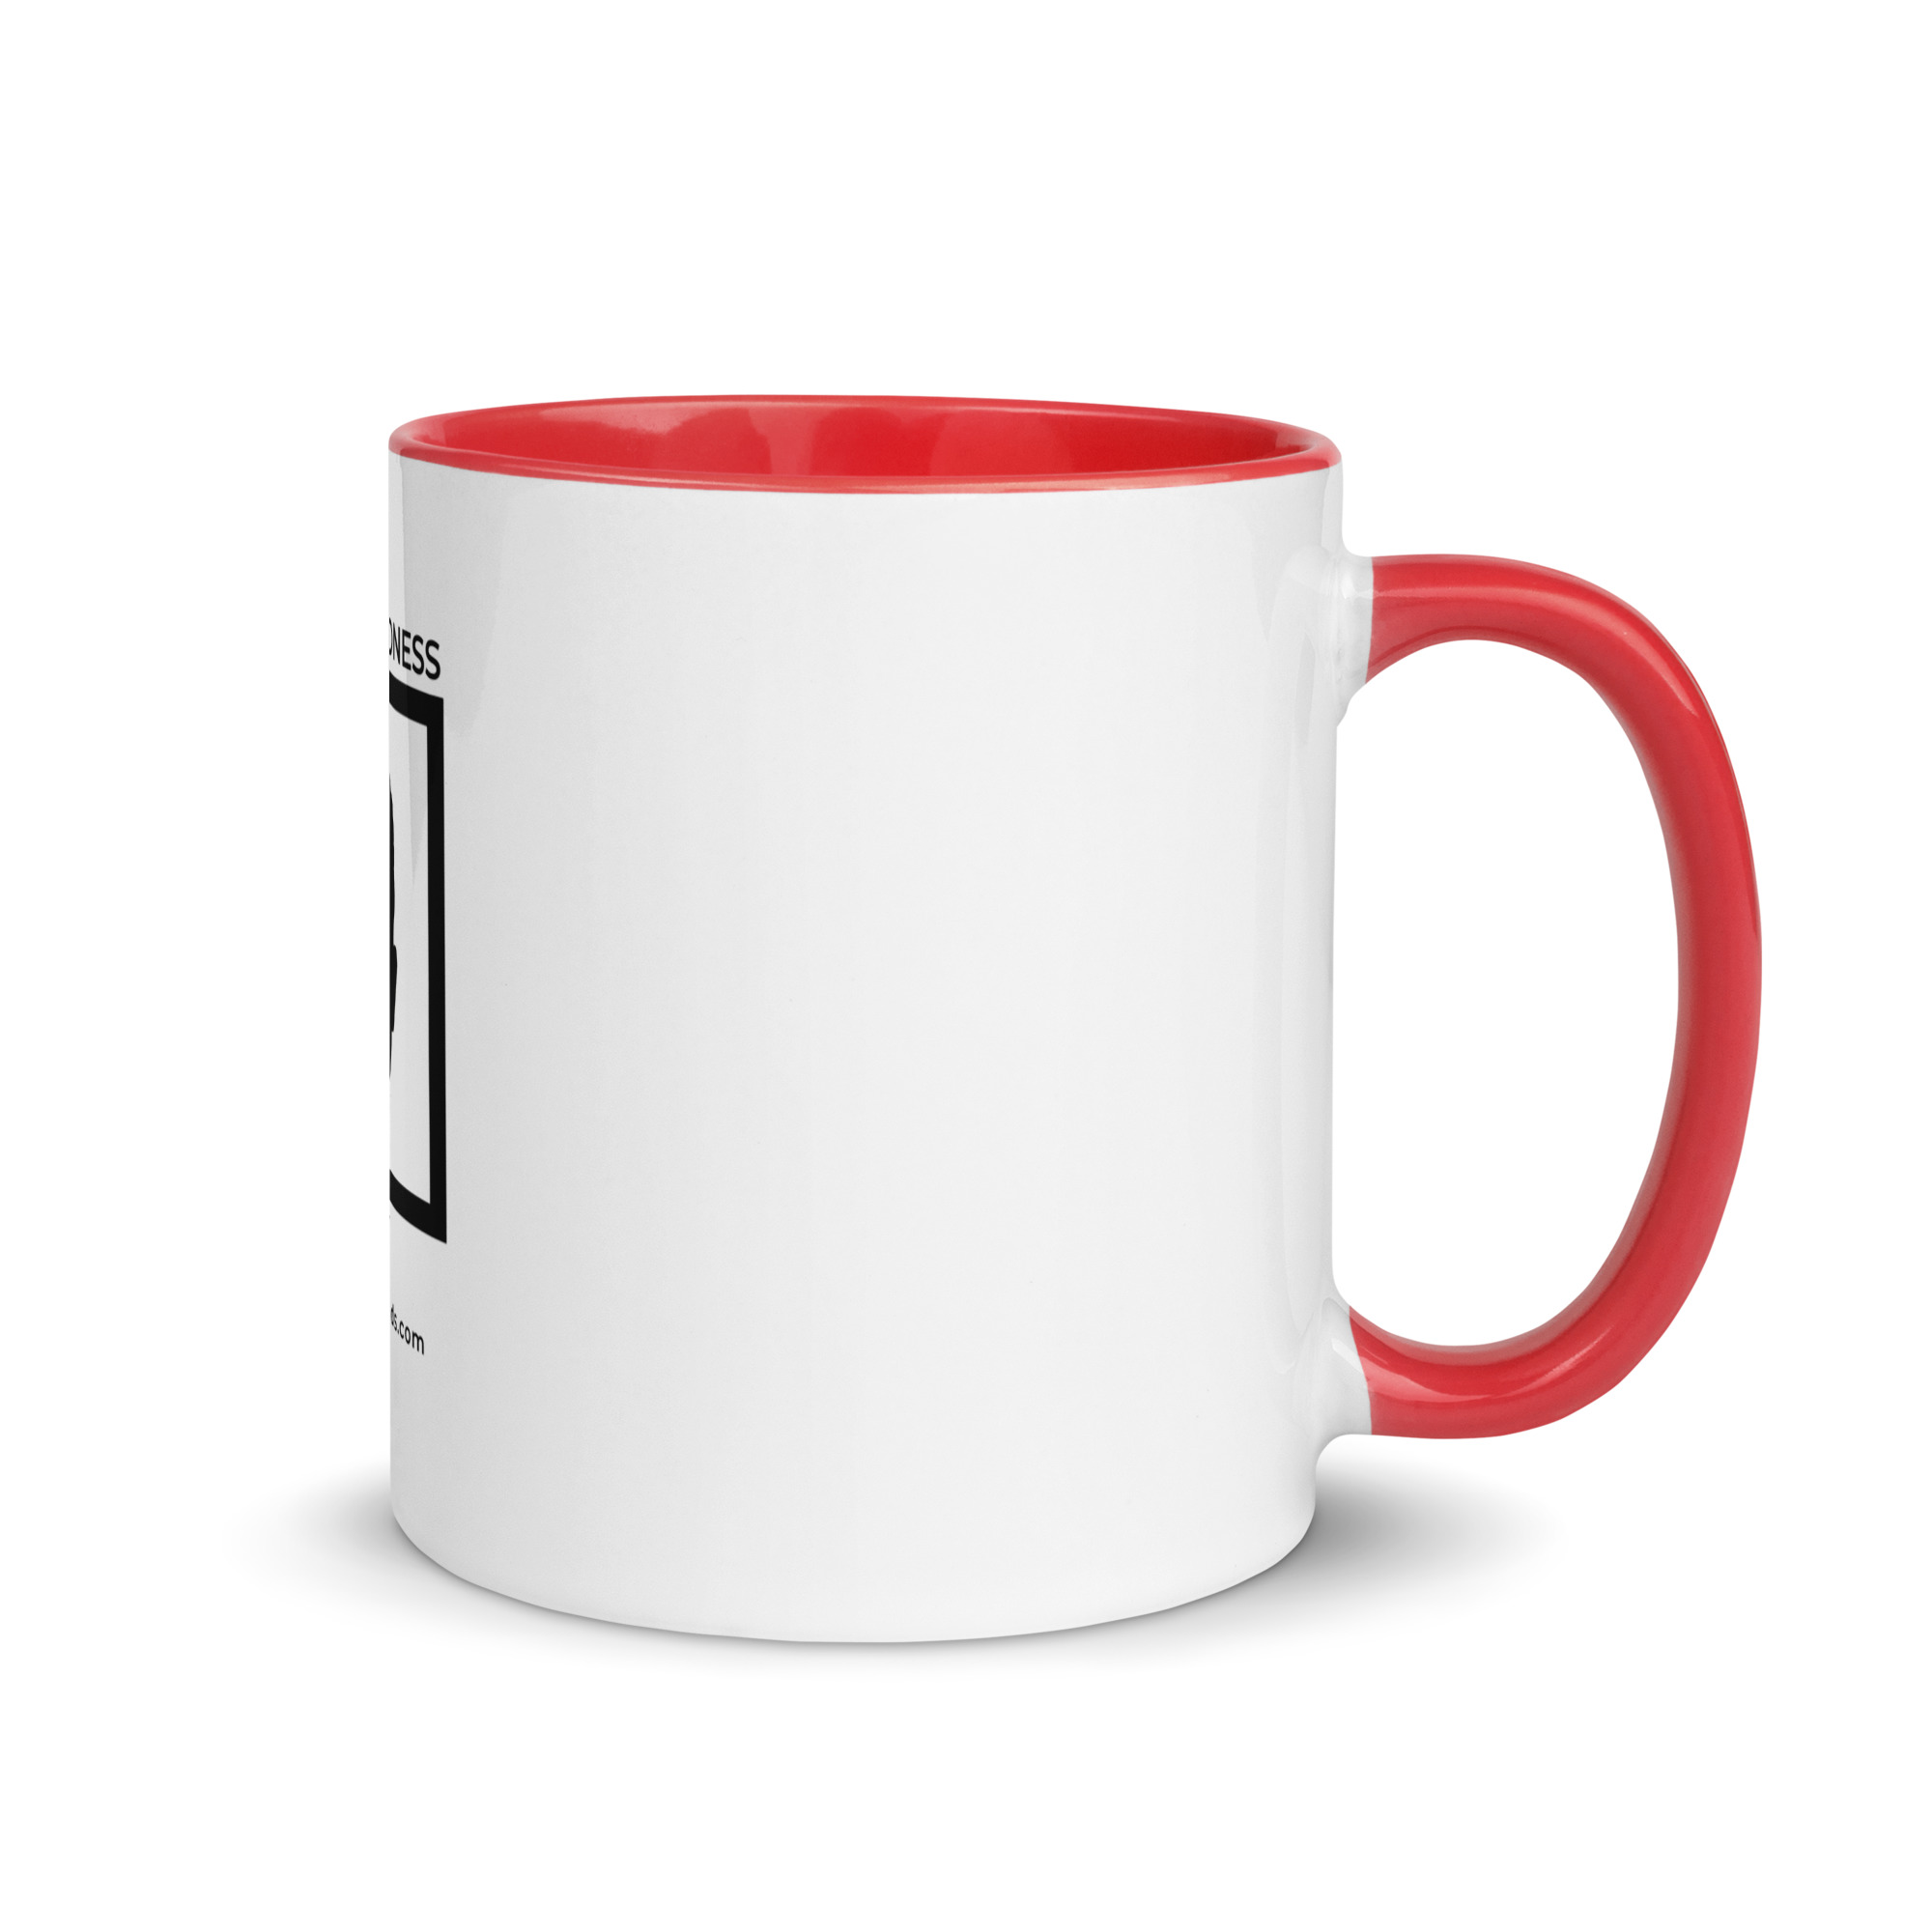 white-ceramic-mug-with-color-inside-red-11-oz-right-6522a1a403bc6.jpg